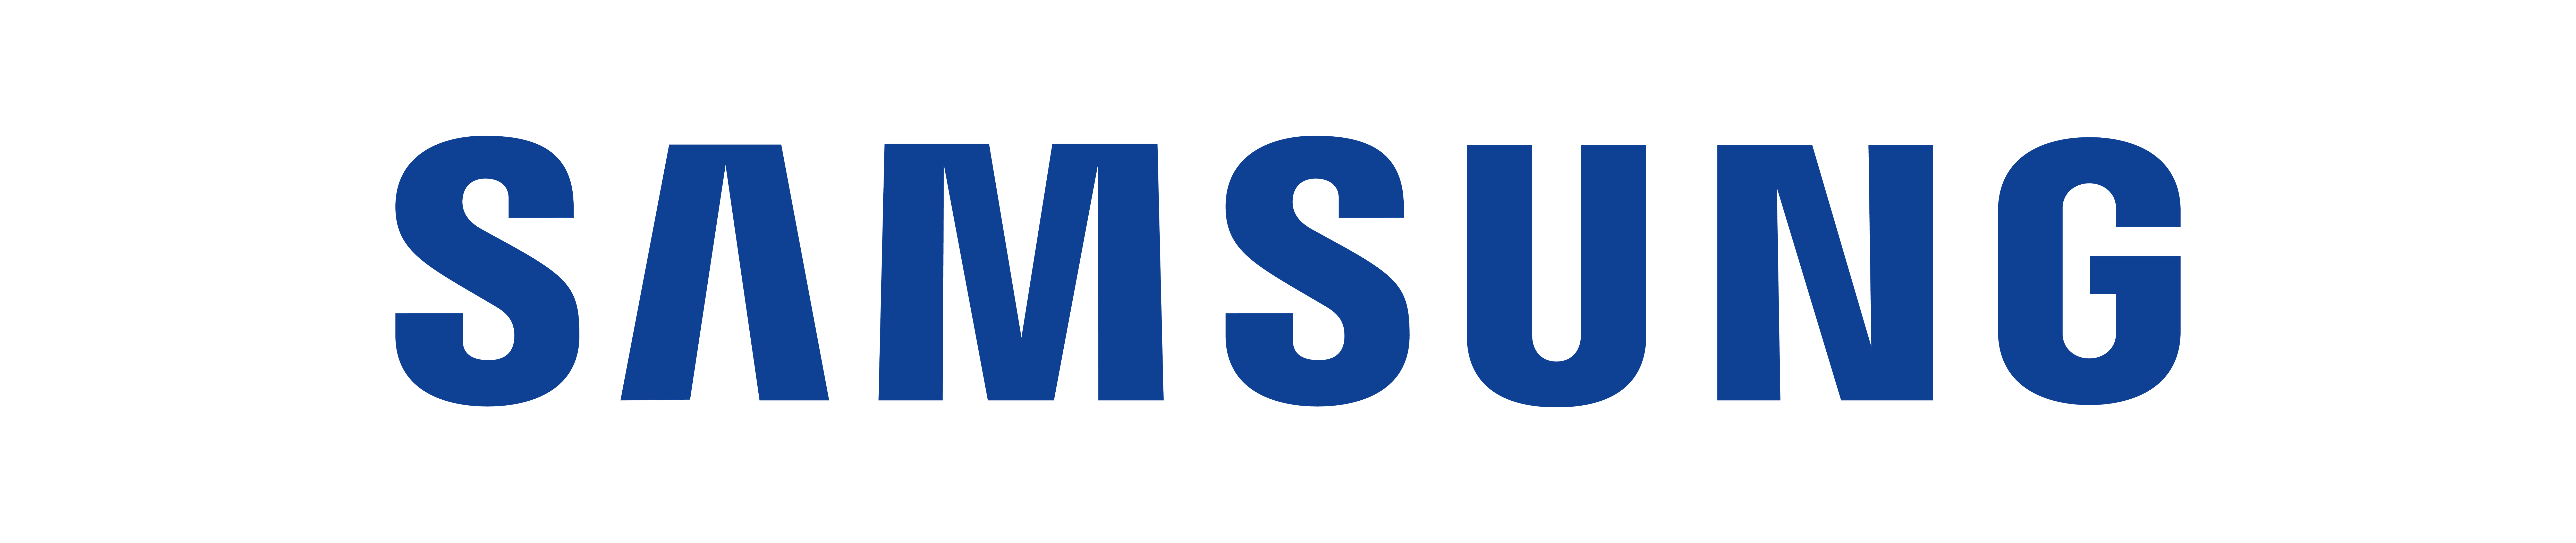 Samsung Phone Logo - Samsung galaxy Logos